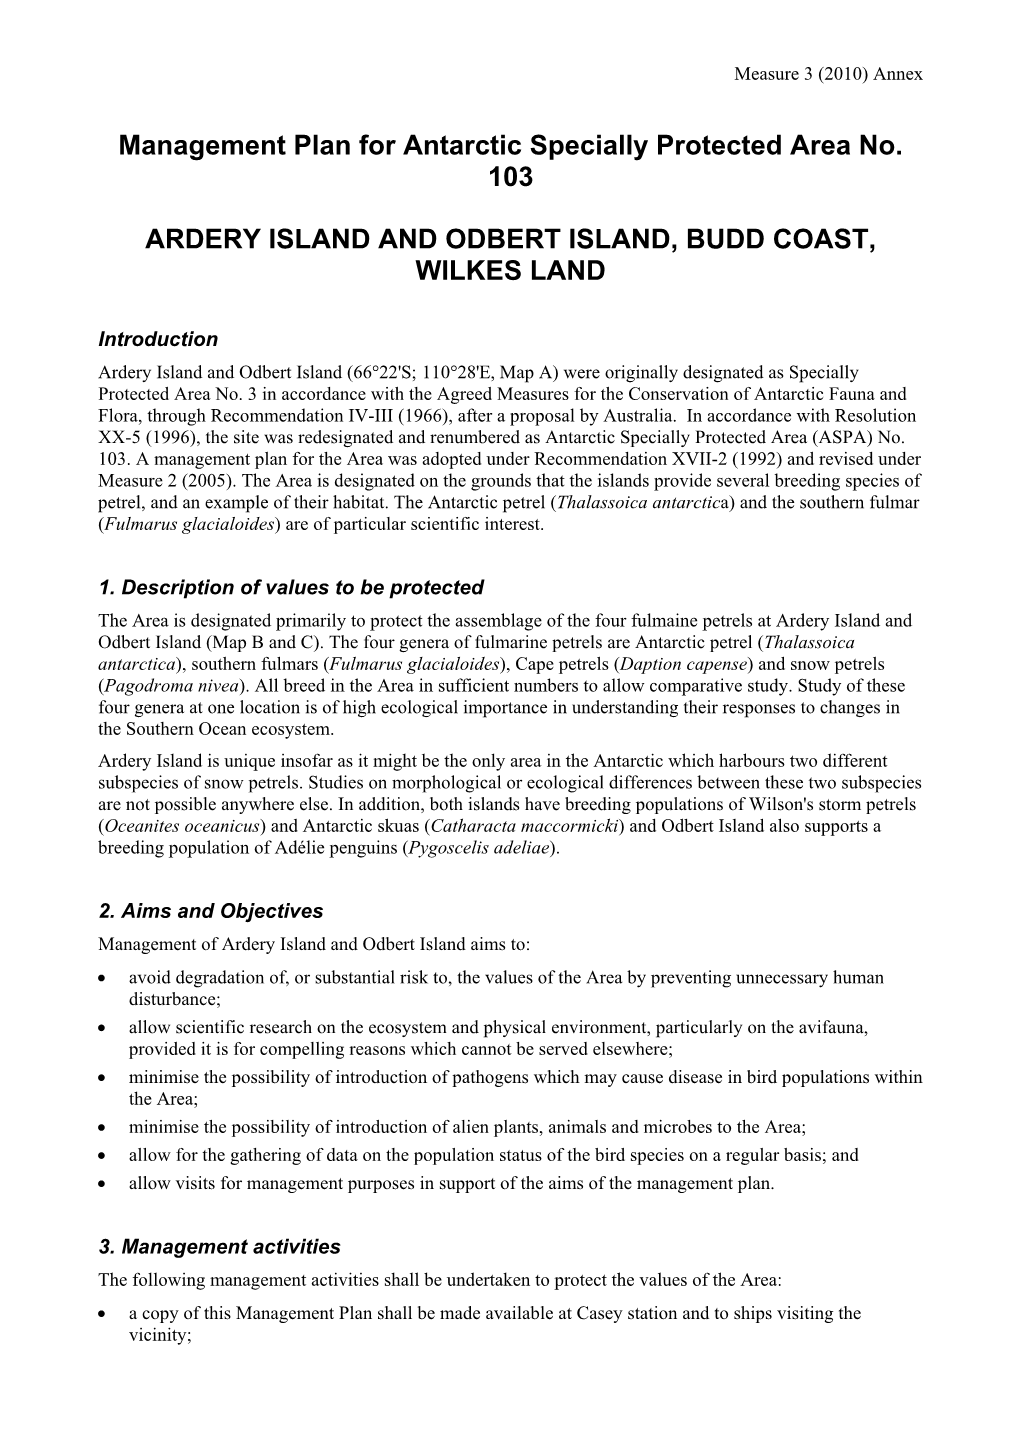 Ardery Island and Odbert Island, Budd Coast, Wilkes Land